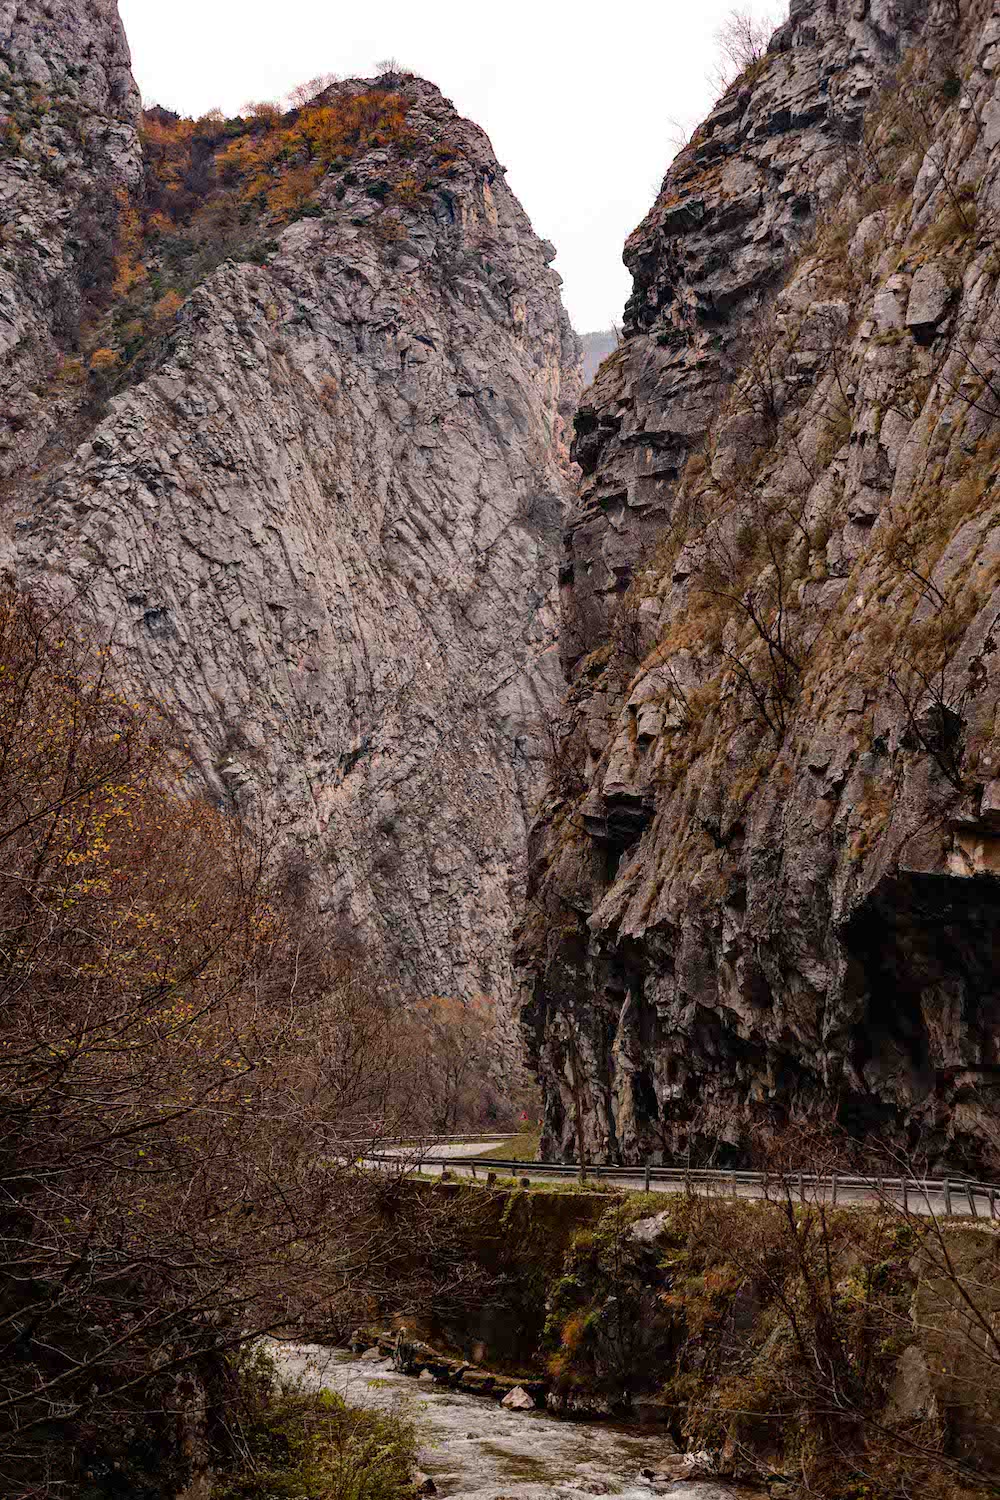 Mountain road through the Sharr mountains just outside of Prizren